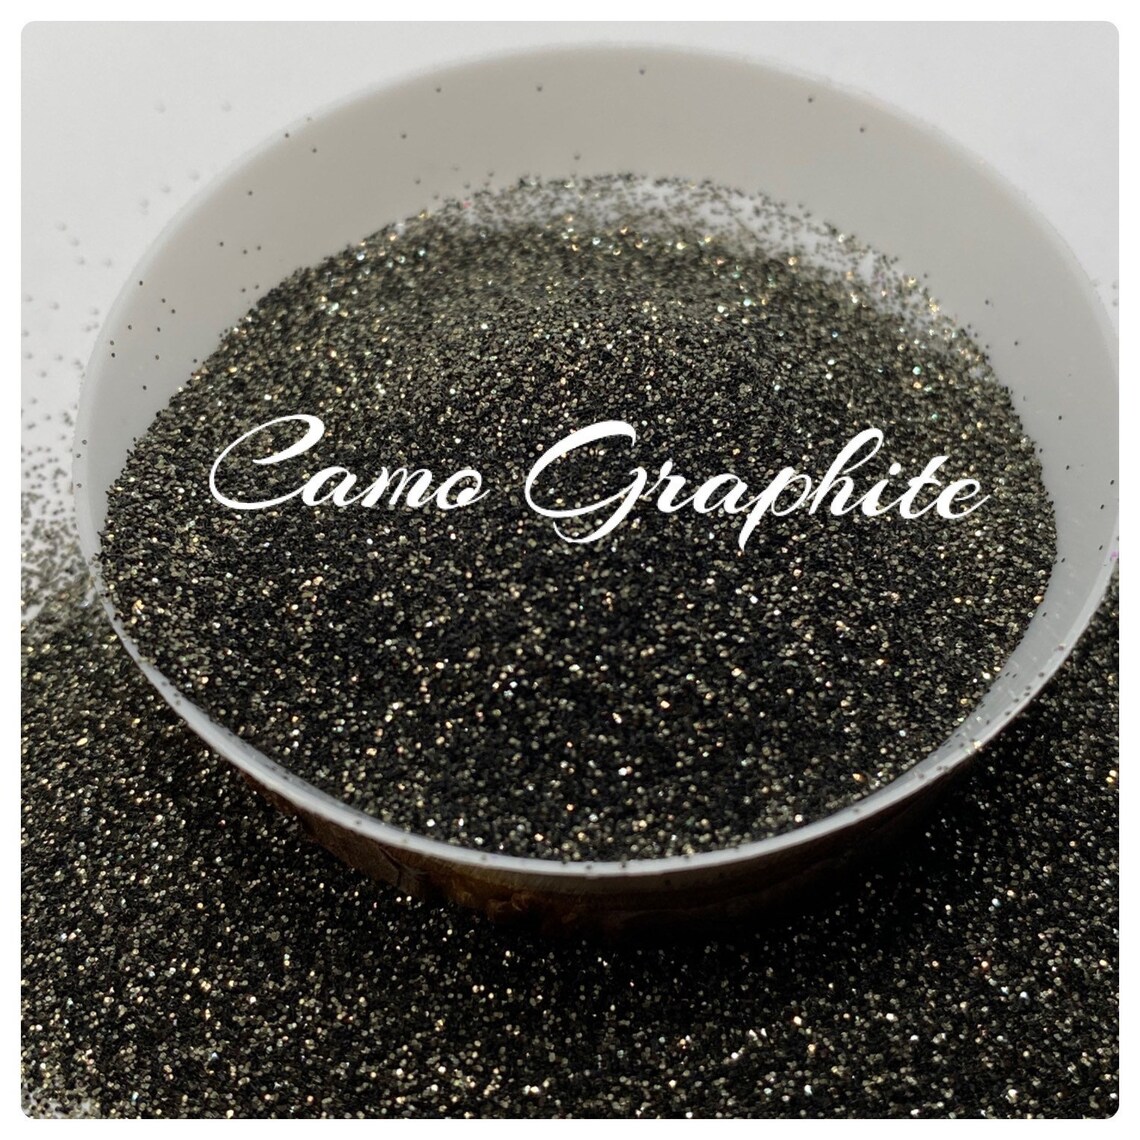 Camo Graphite: Metallic golden black fine glitter 1oz by TwoFaced